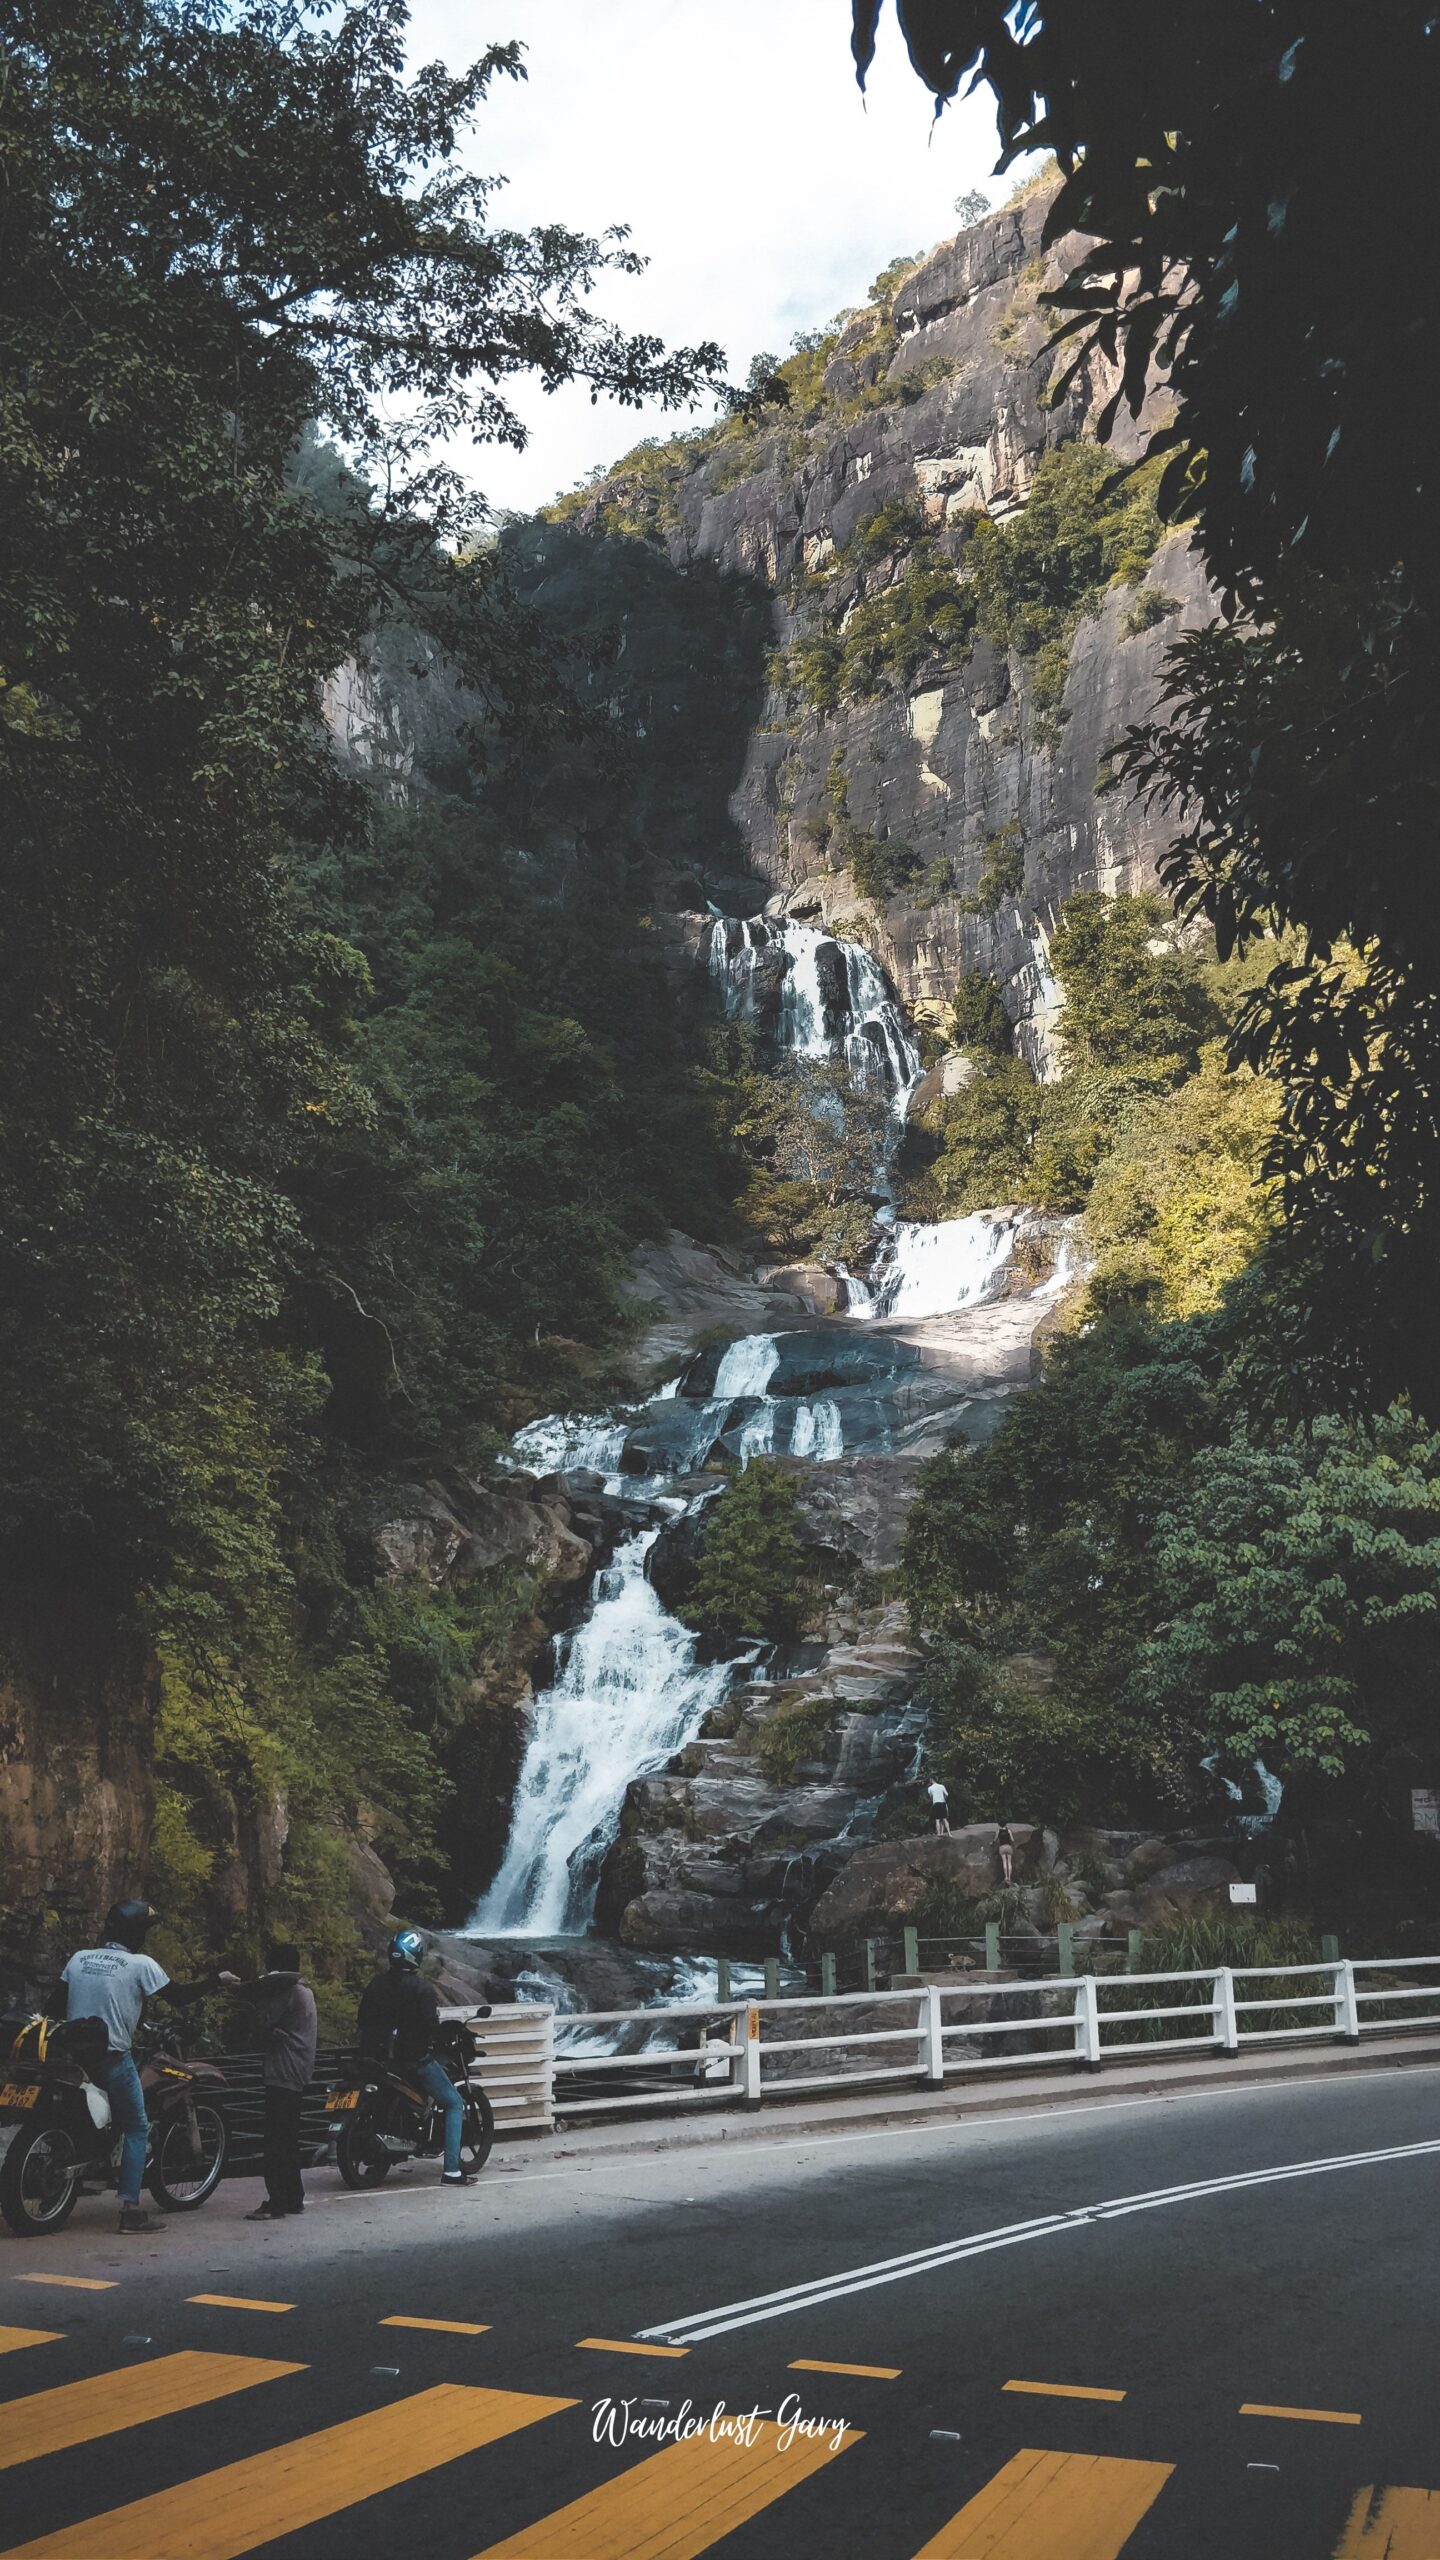 Ravana Falls - Wanderlusgary